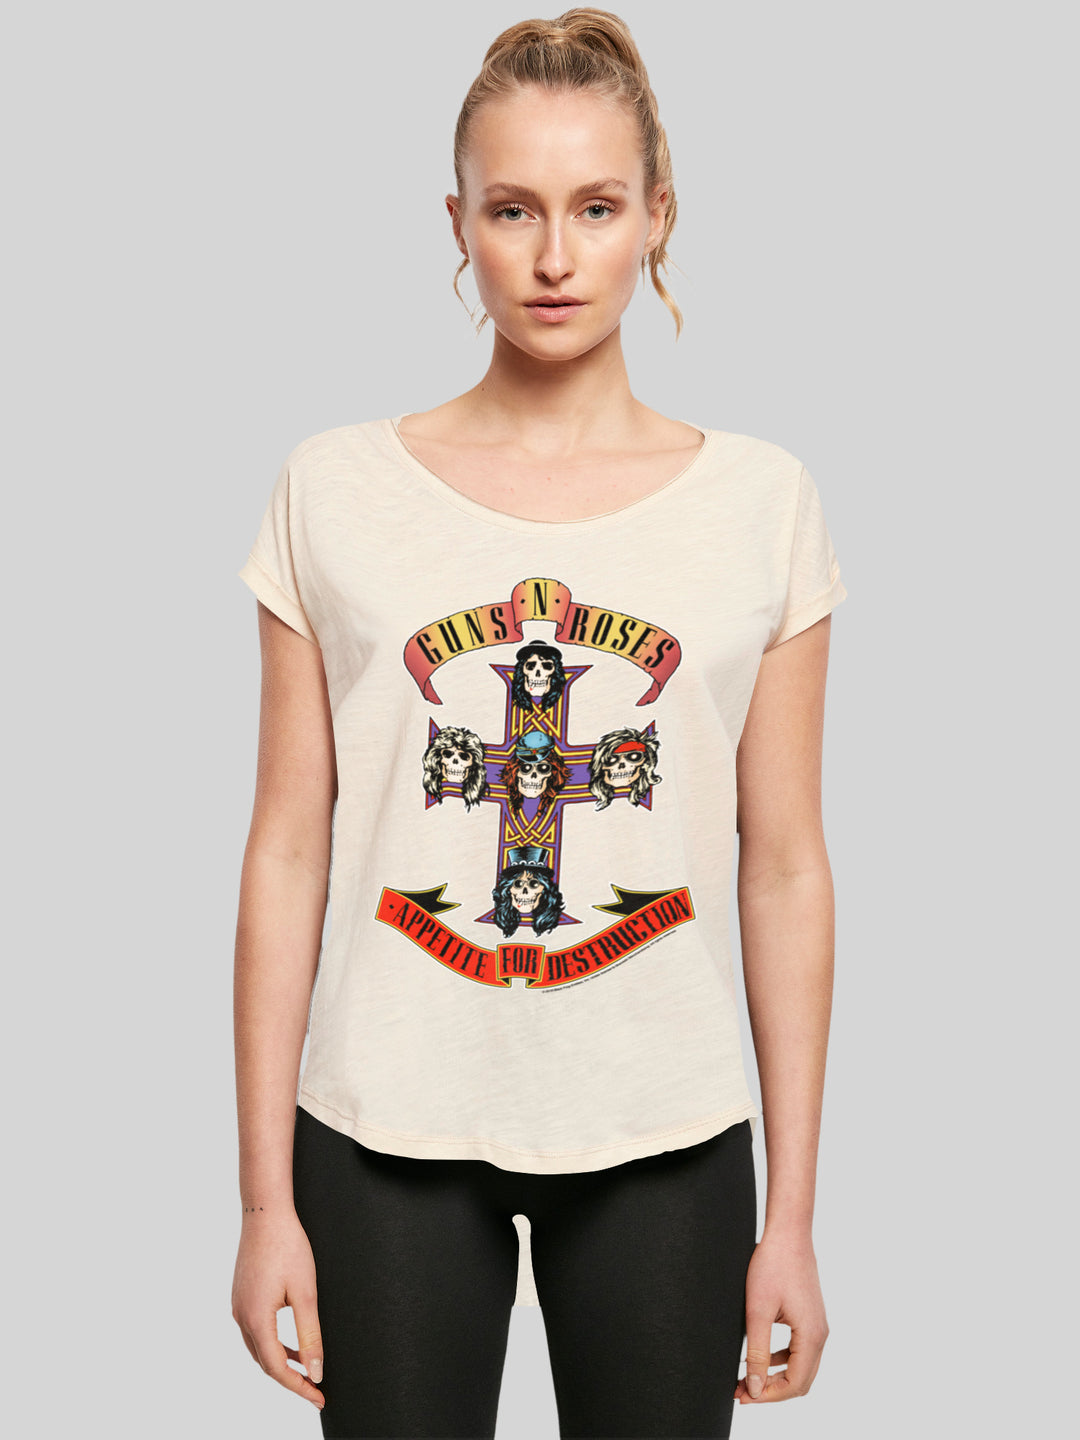 Guns 'n' Roses T-Shirt | Appetite For Destruction | Premium Long Ladies Tee